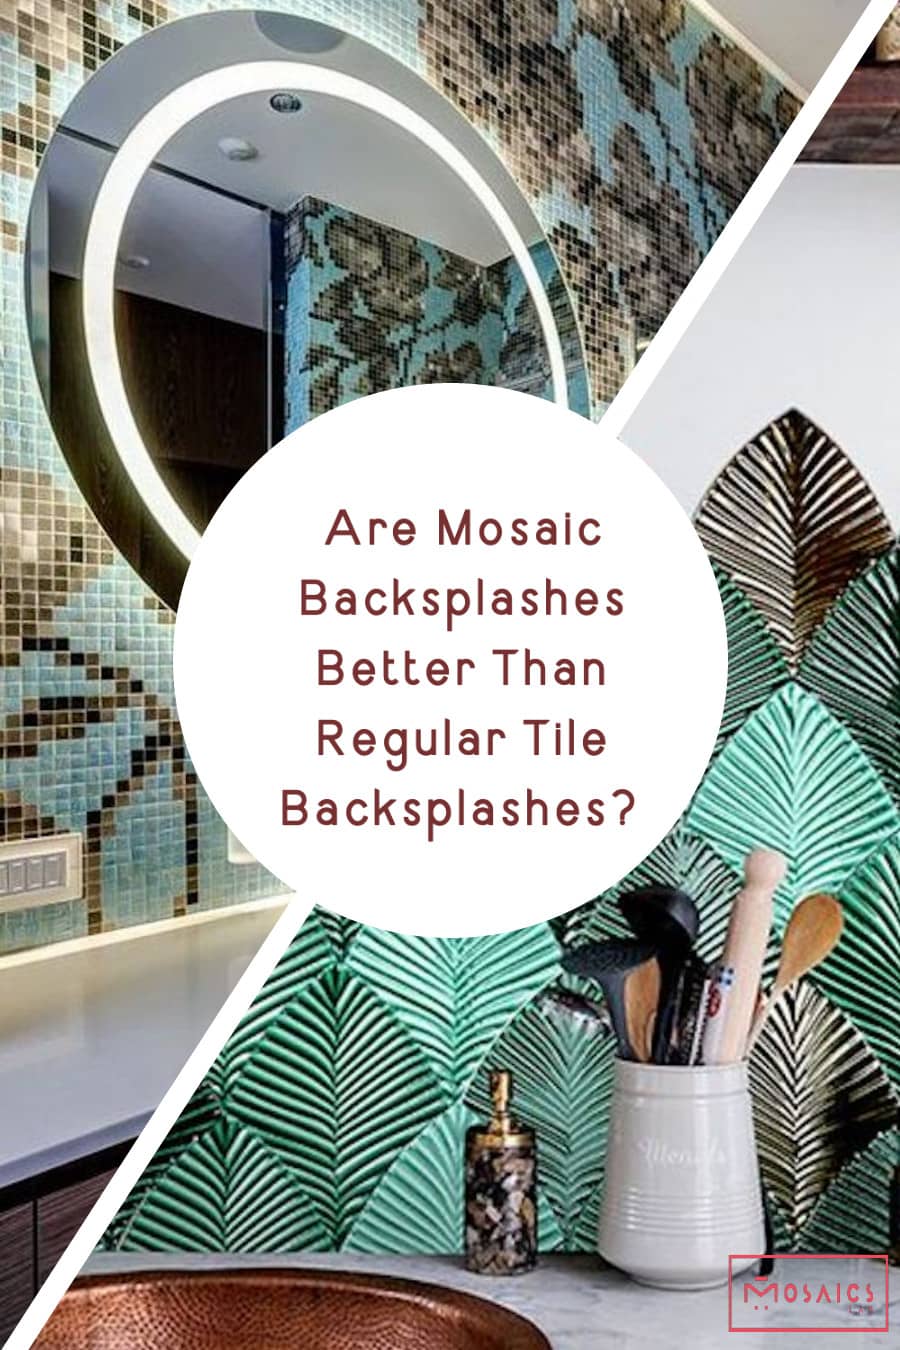 Kitchen_Mosaic_Backsplash - Bathroom_Backsplash - Kitchen_Backsplash - Mosaic_Backsplash - Backsplash_Tiles